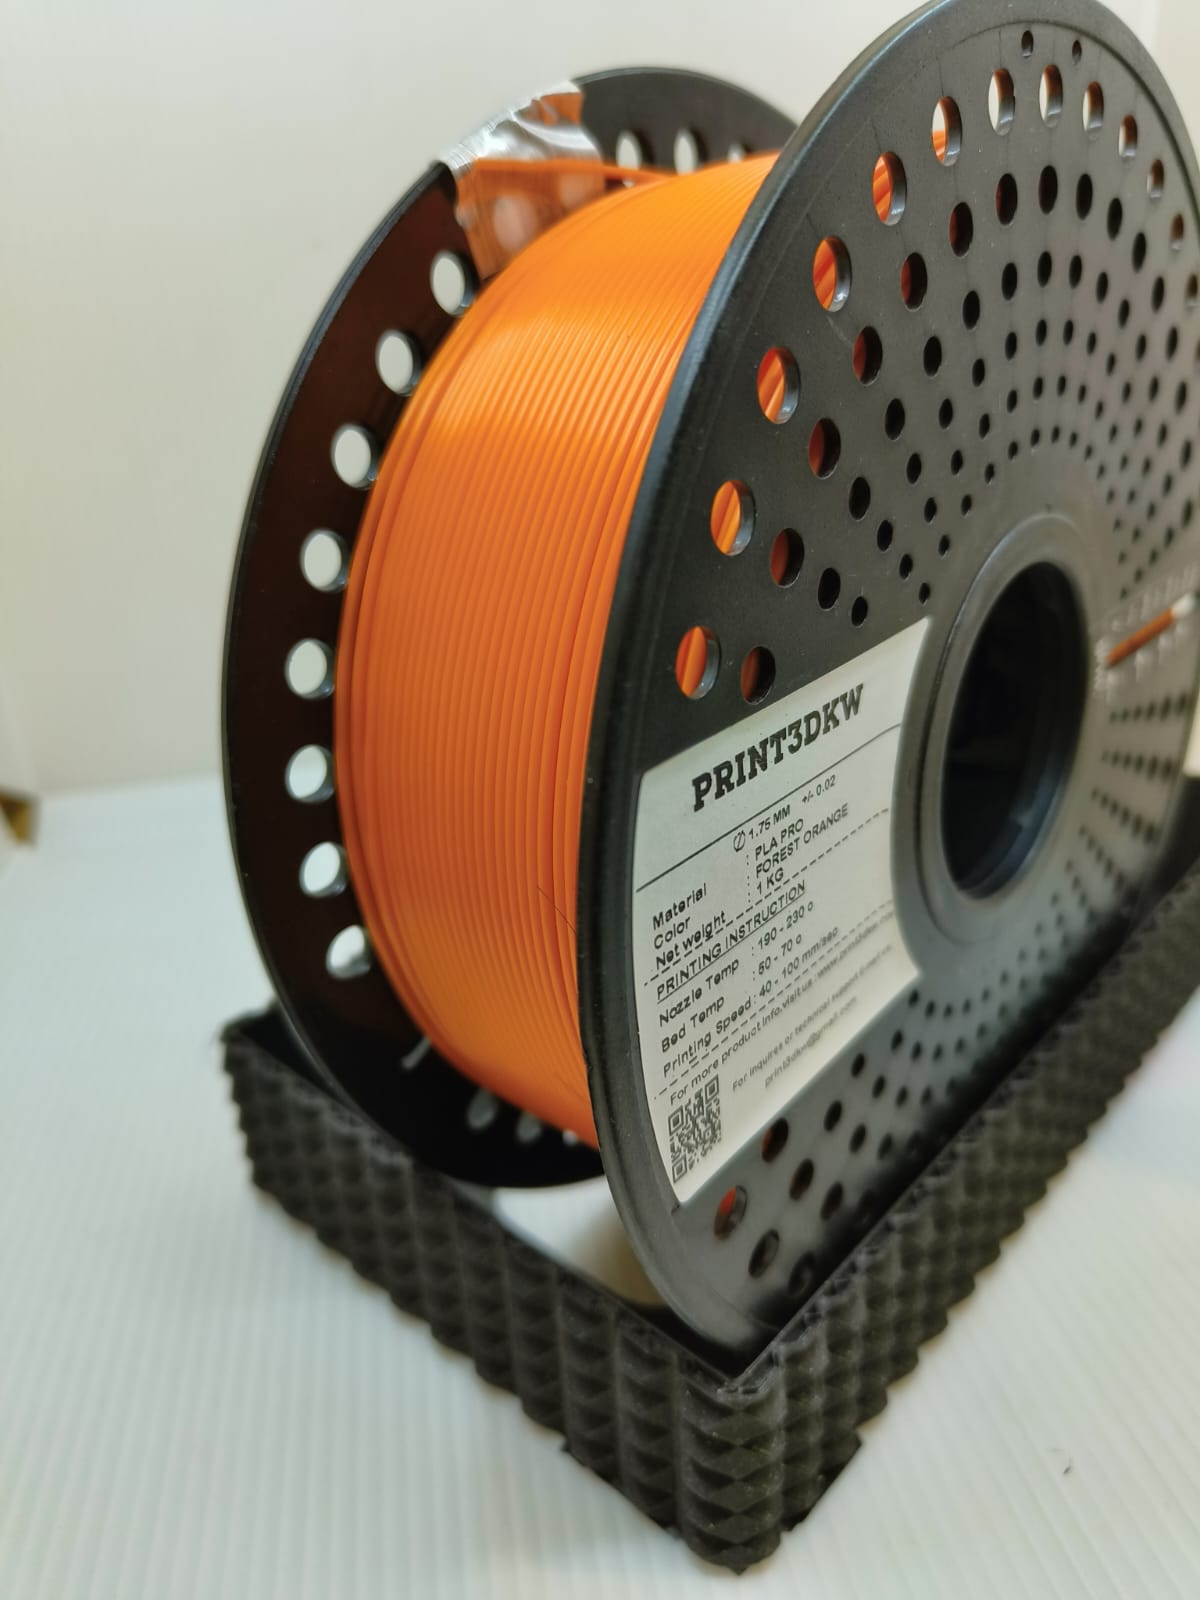 PRINT3DKW PLA PRO 3D Printing Filament Orange